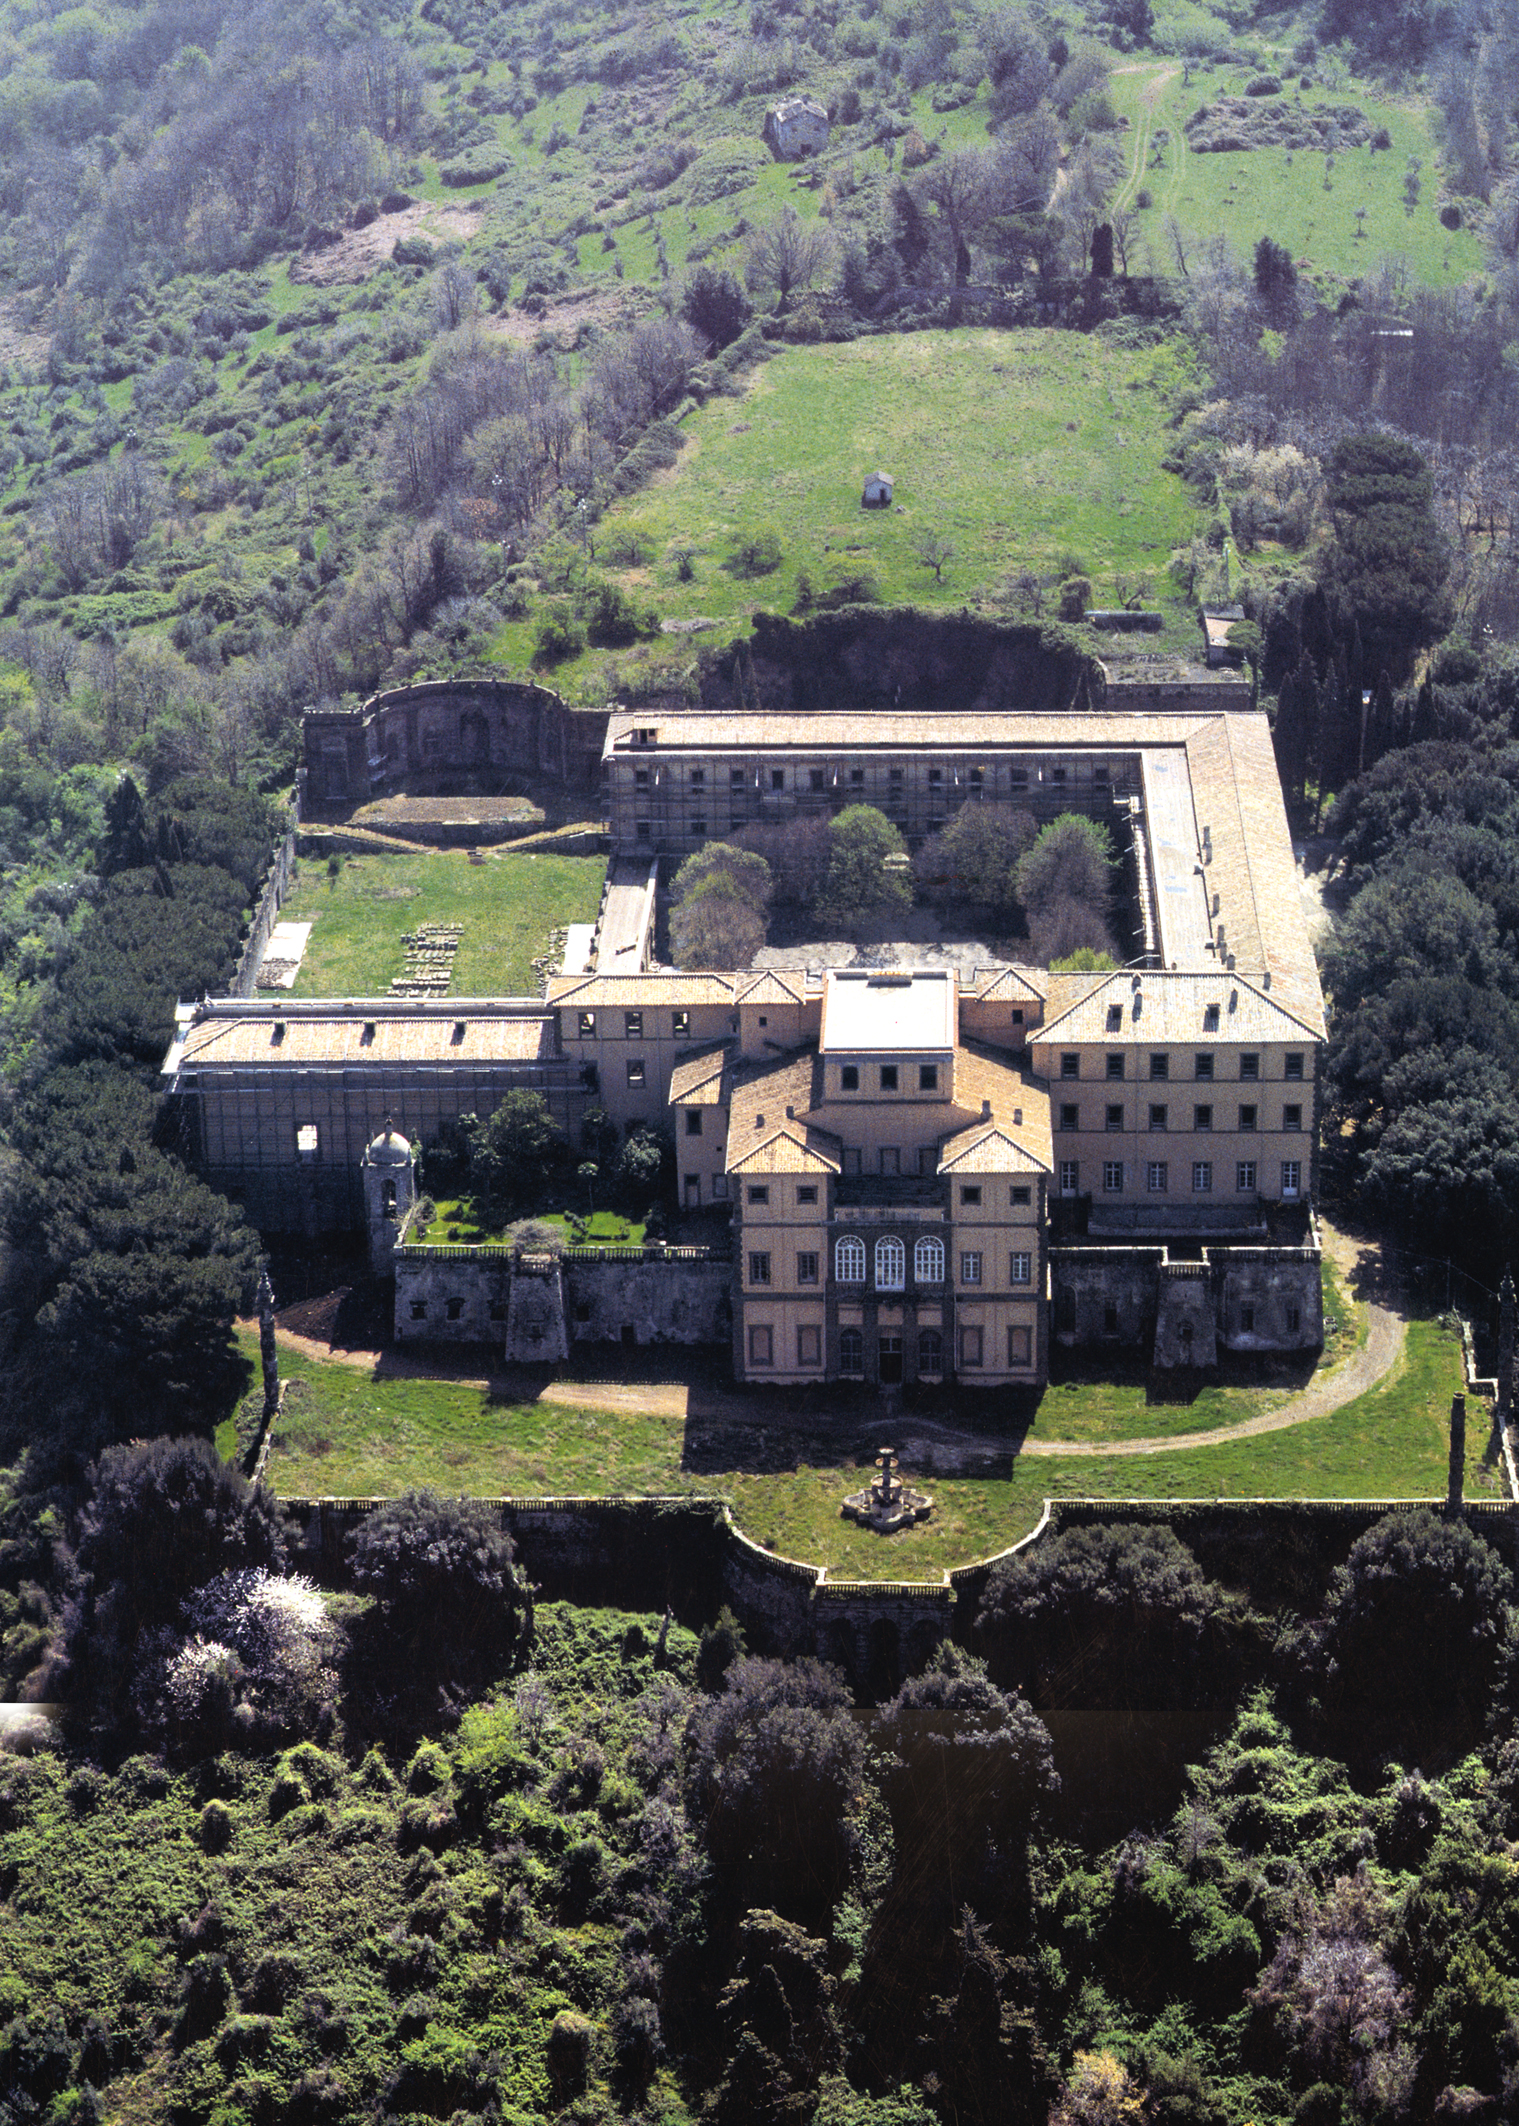 Villa Mondragone